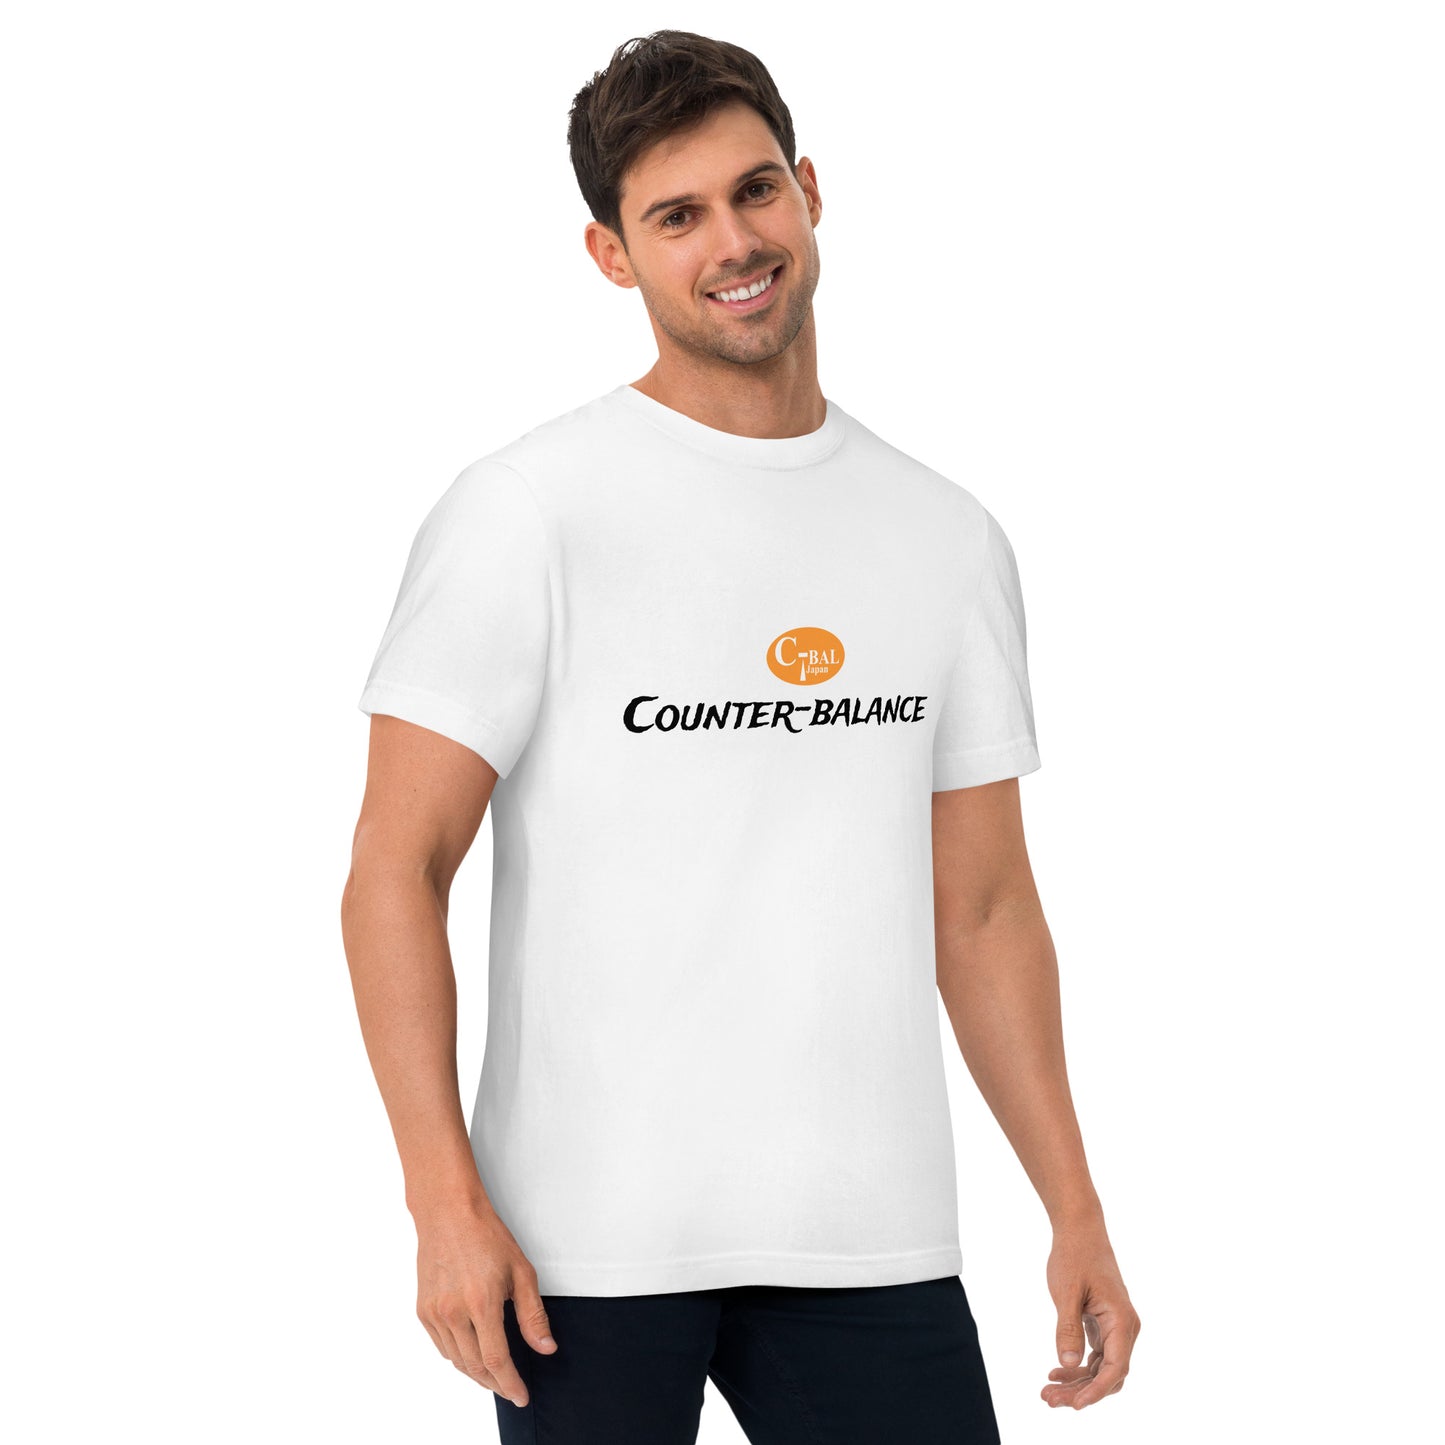 A004 - High Quality Cotton T-shirt (C-BAL : White / Orange)